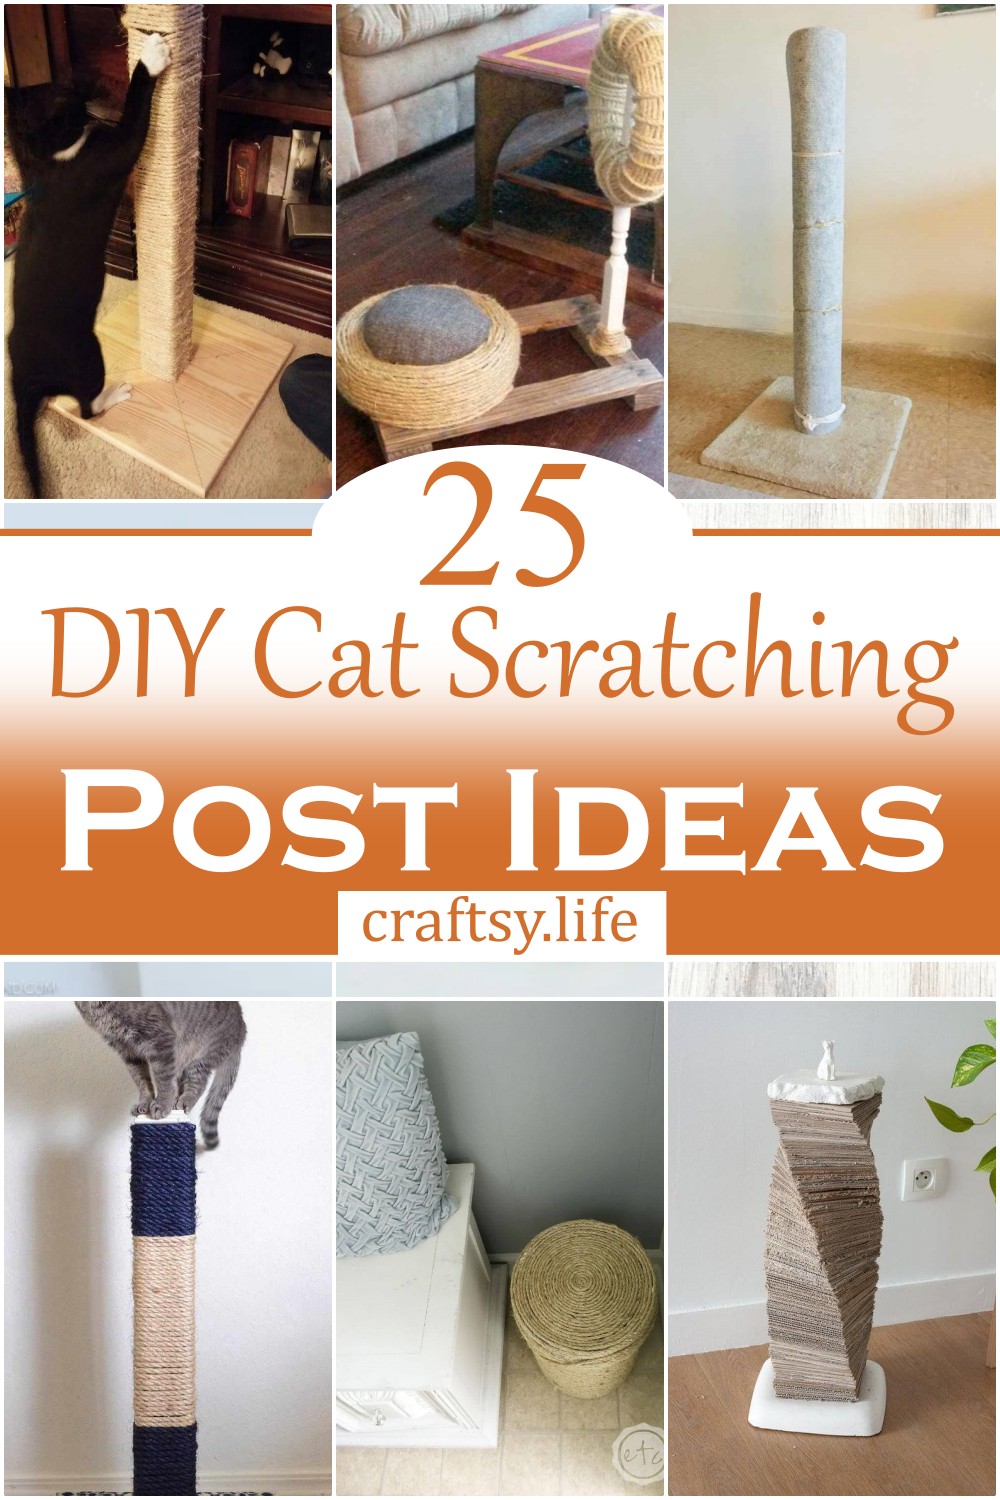 DIY Cat Scratching Post Ideas